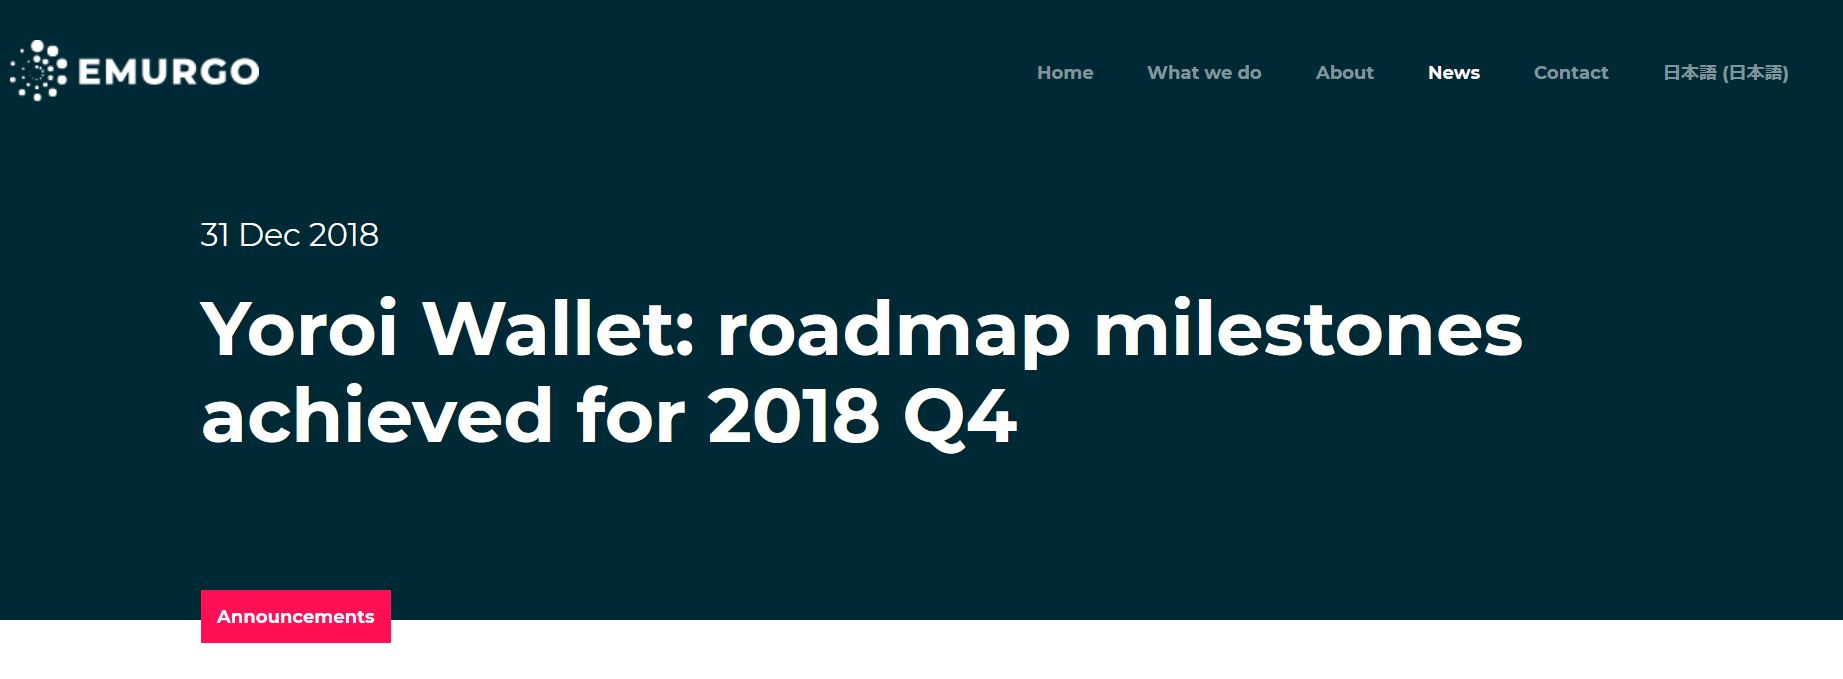 Yoroi Wallet roadmap milestones achieved for 2018 Q4